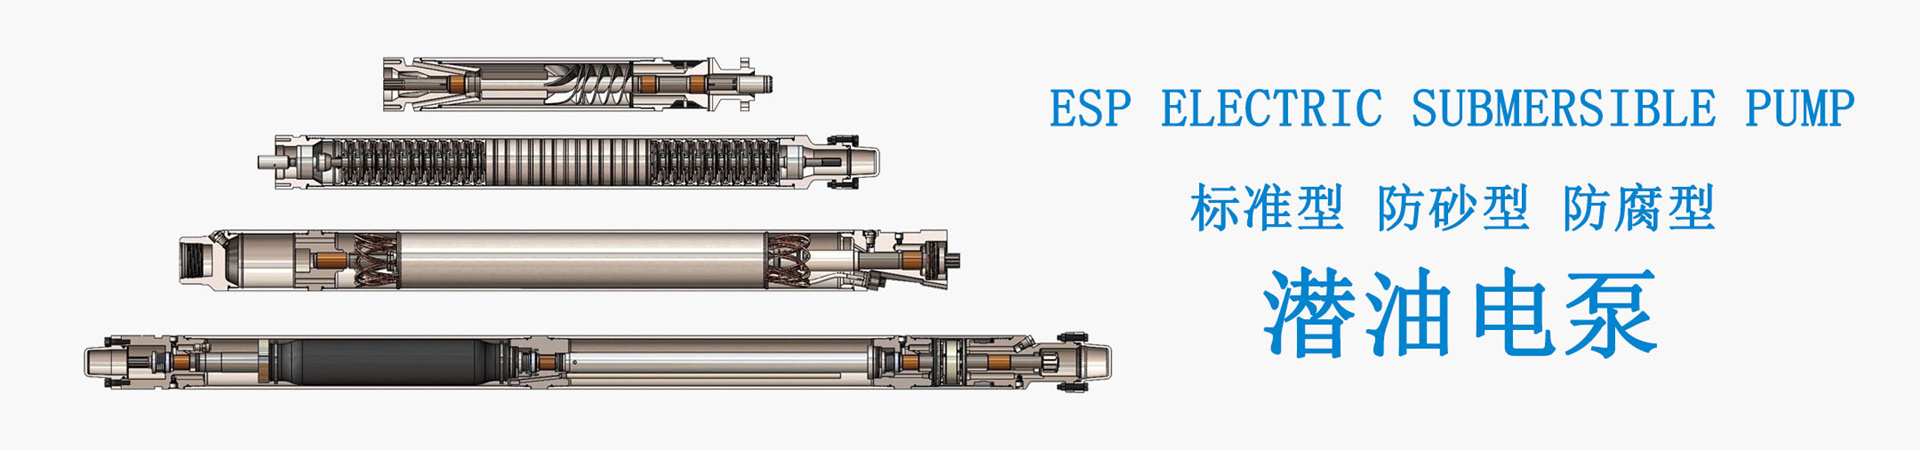 ATESP-潜油电泵-系列